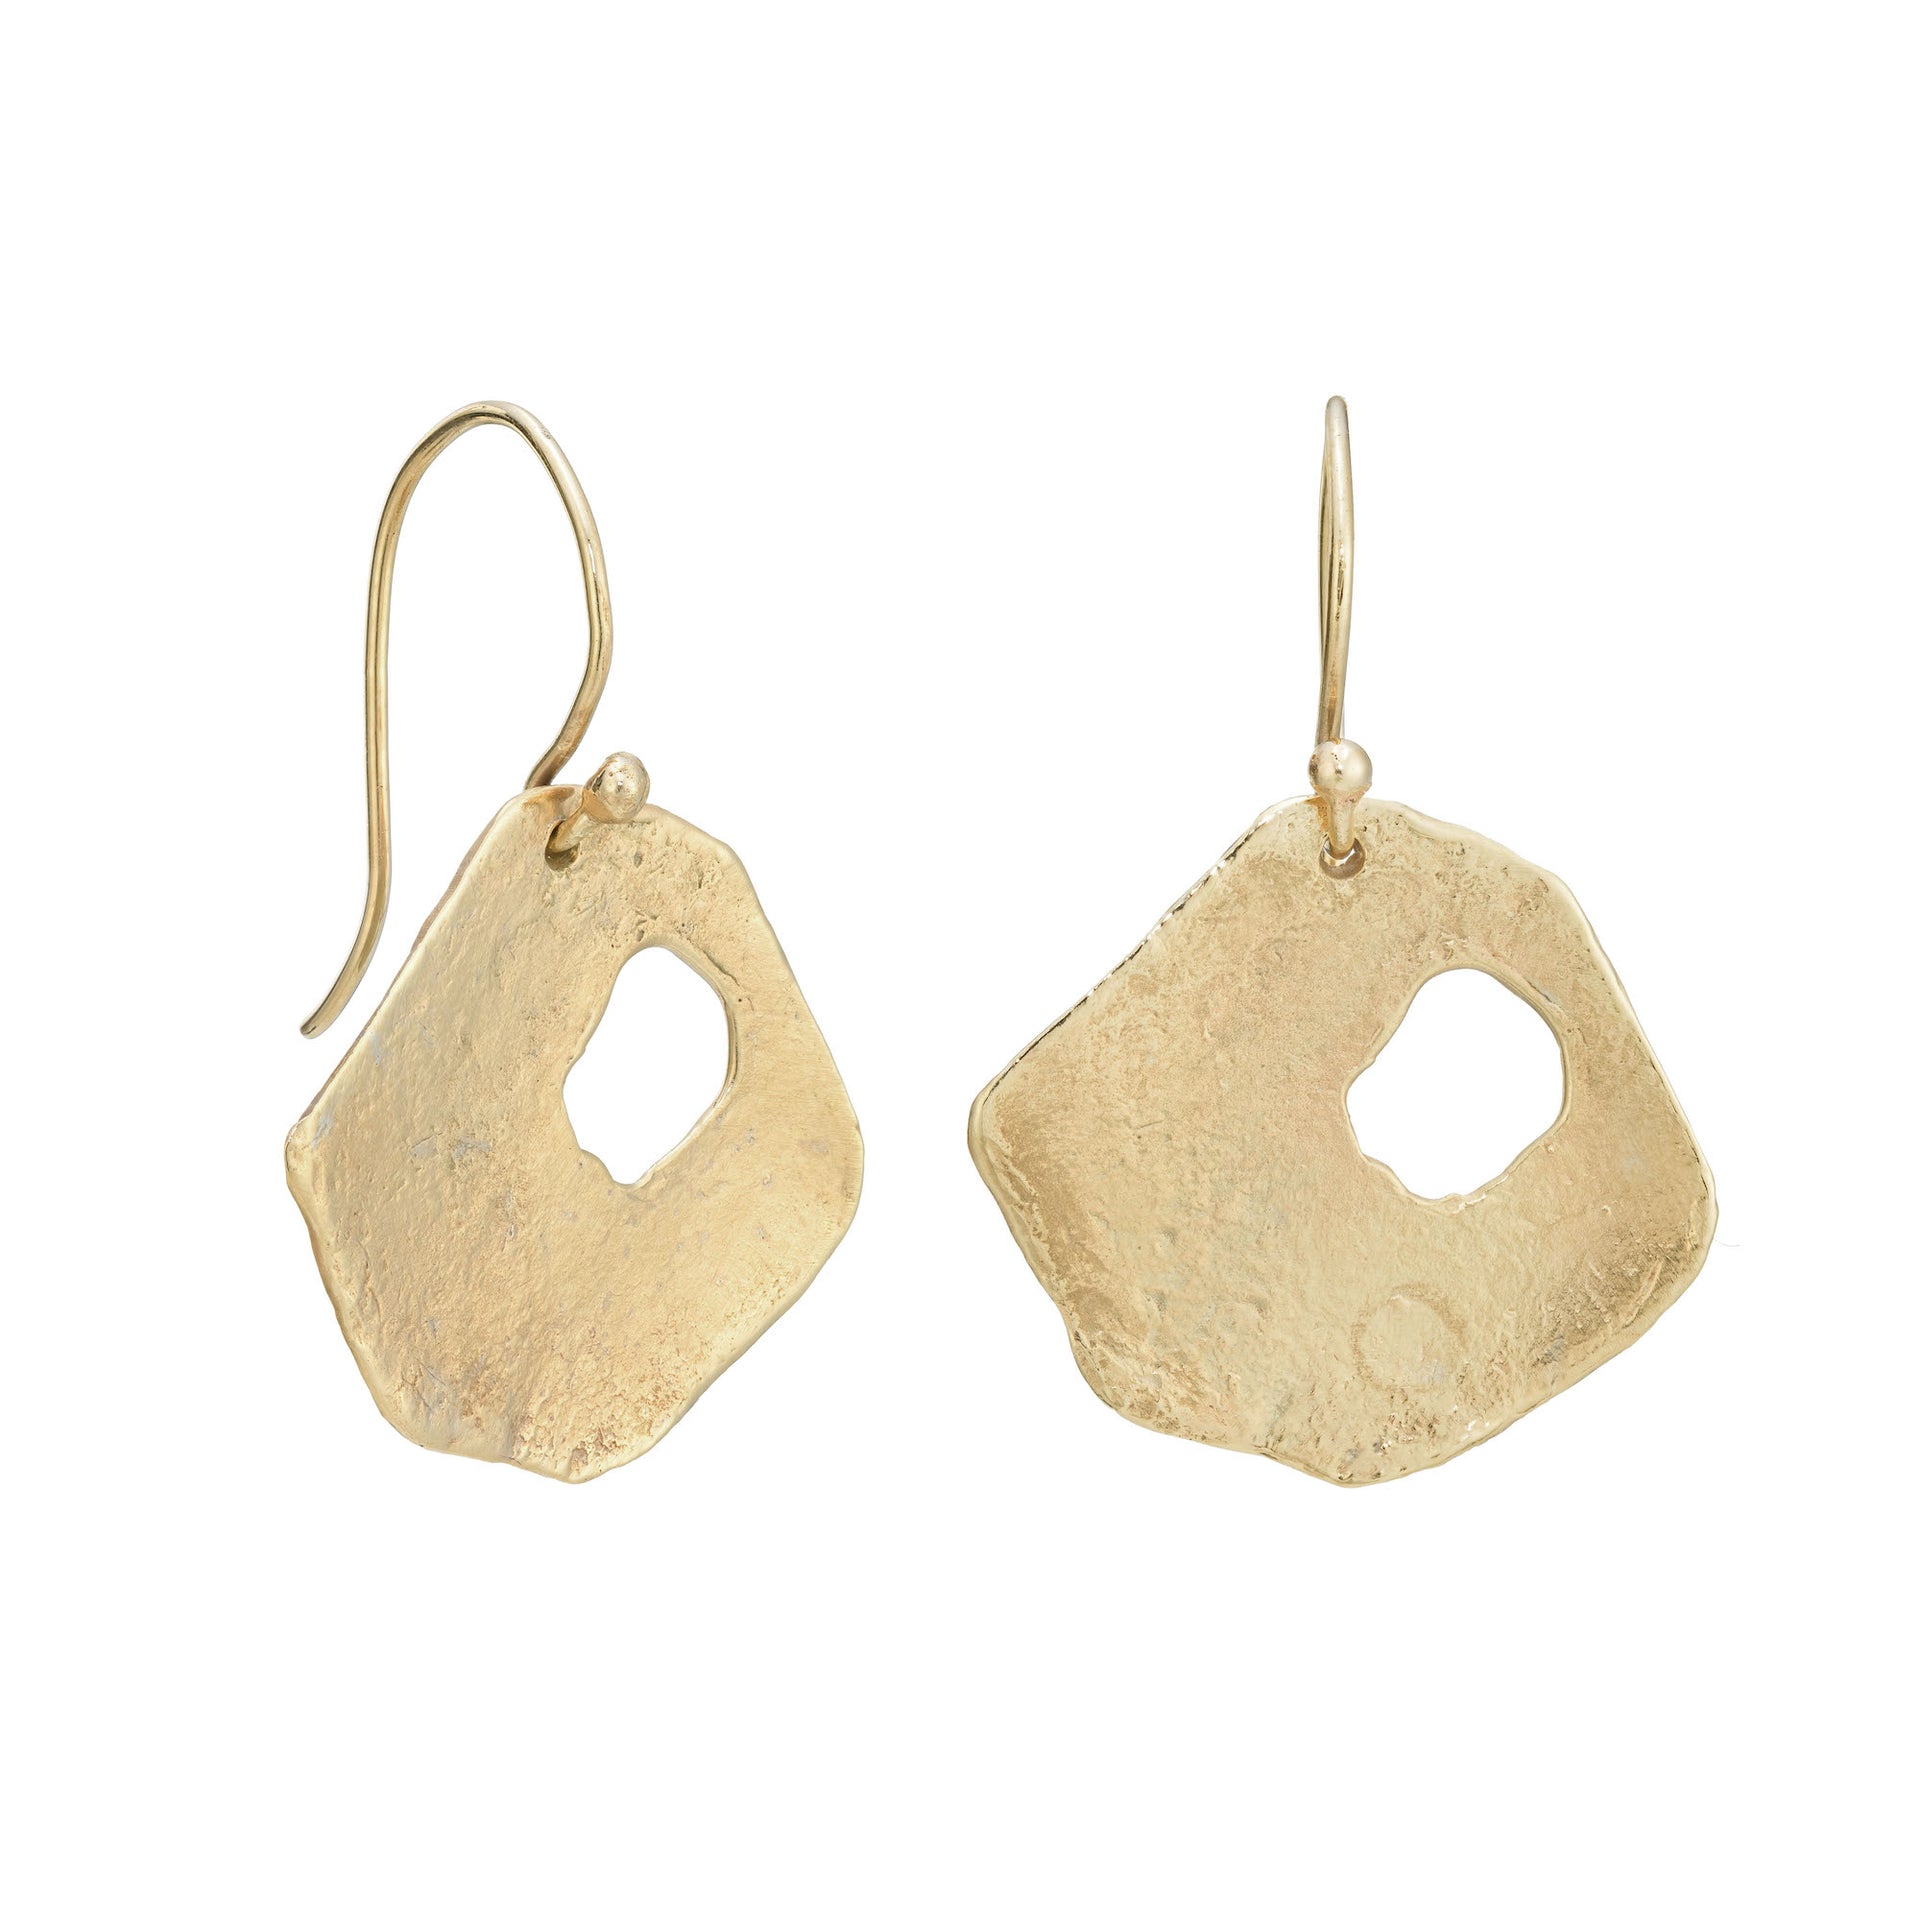 Adder Stone Drops 9ct Gold Earrings, handmade in Cornwall by Emily Nixon.